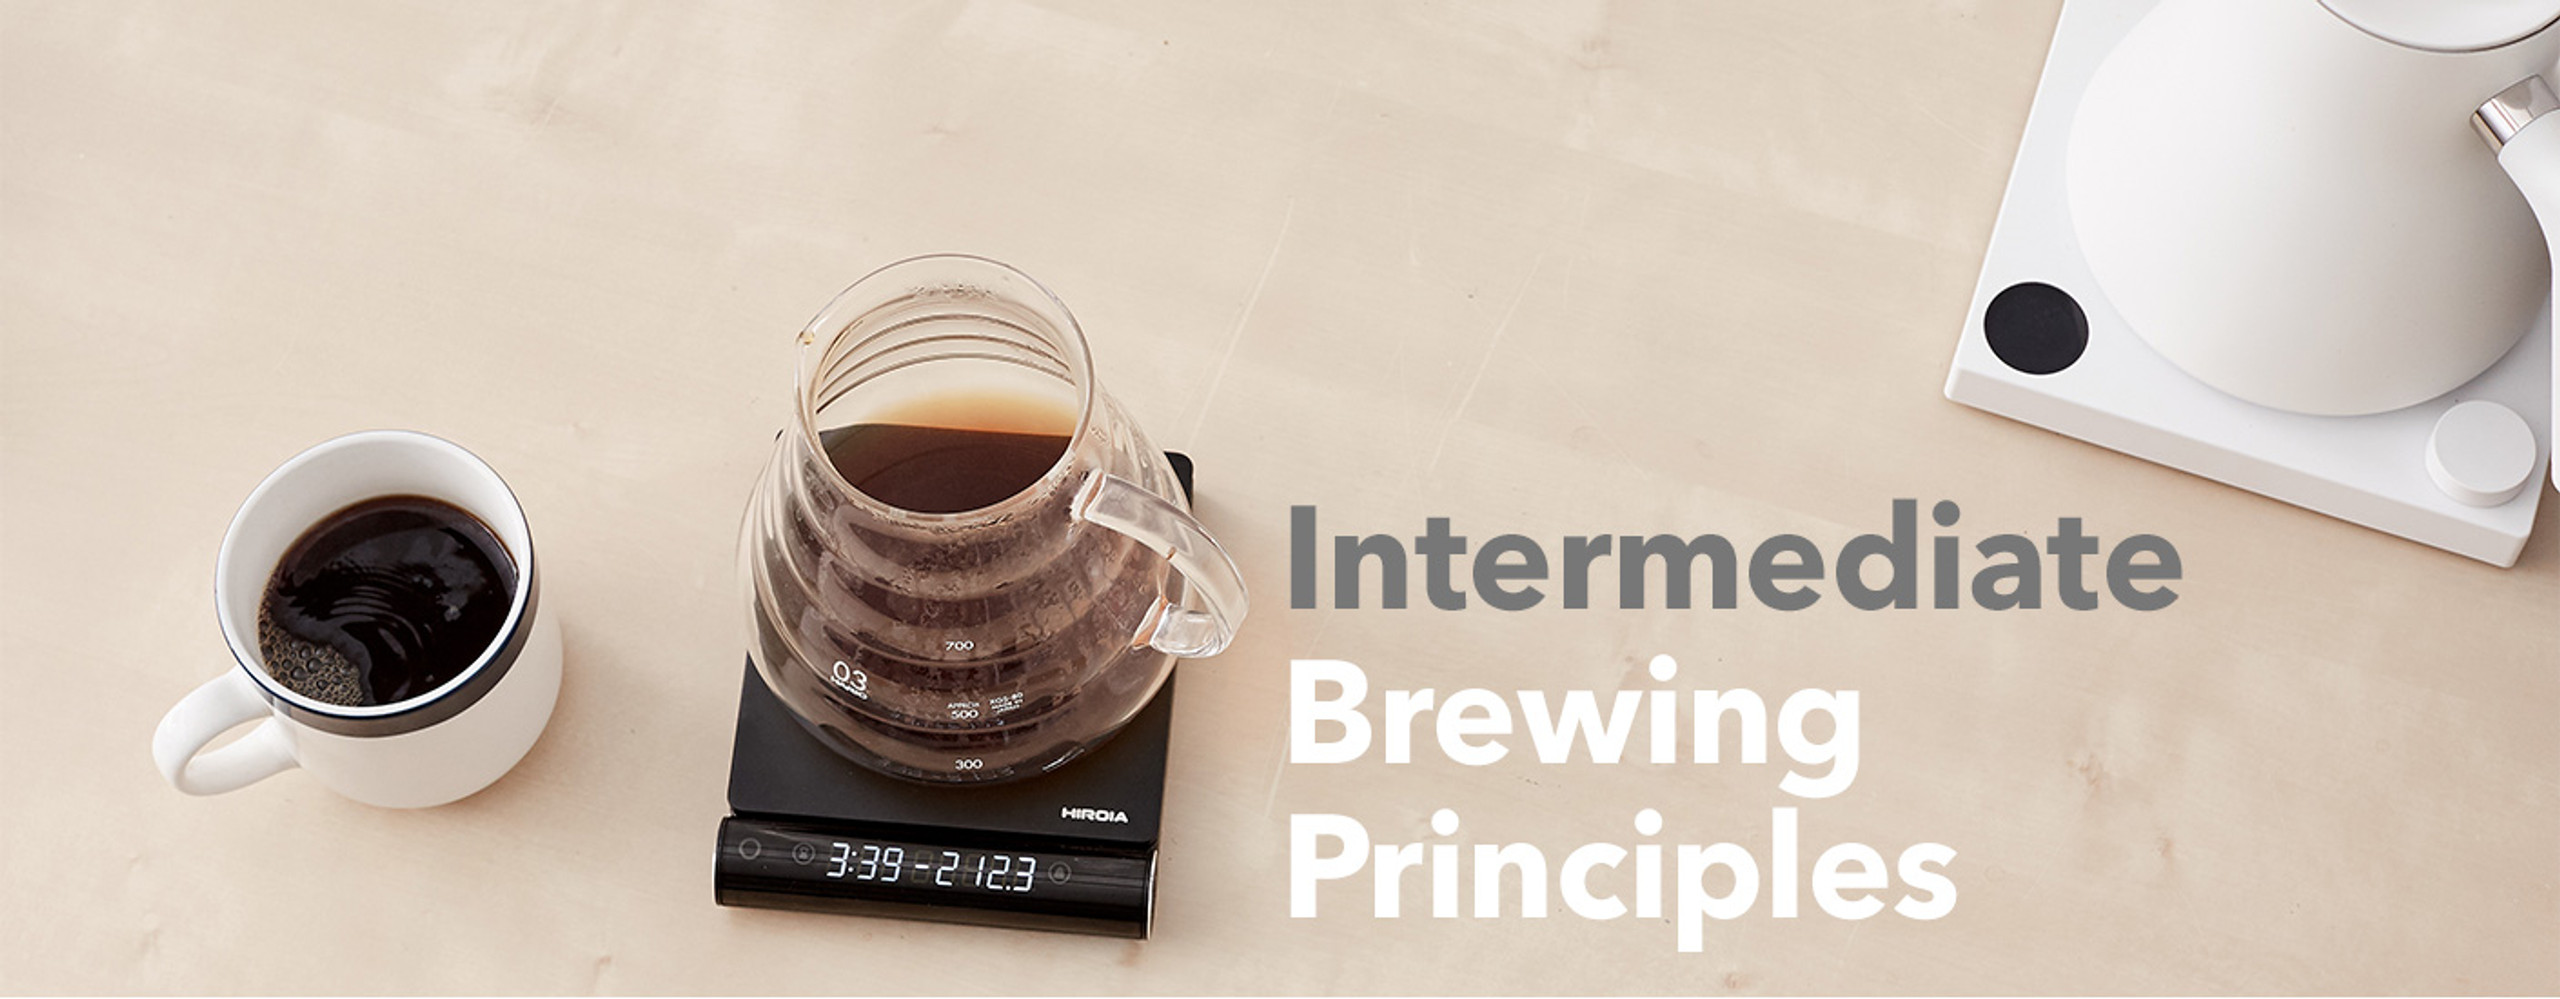 Intermediate Brewing Principles